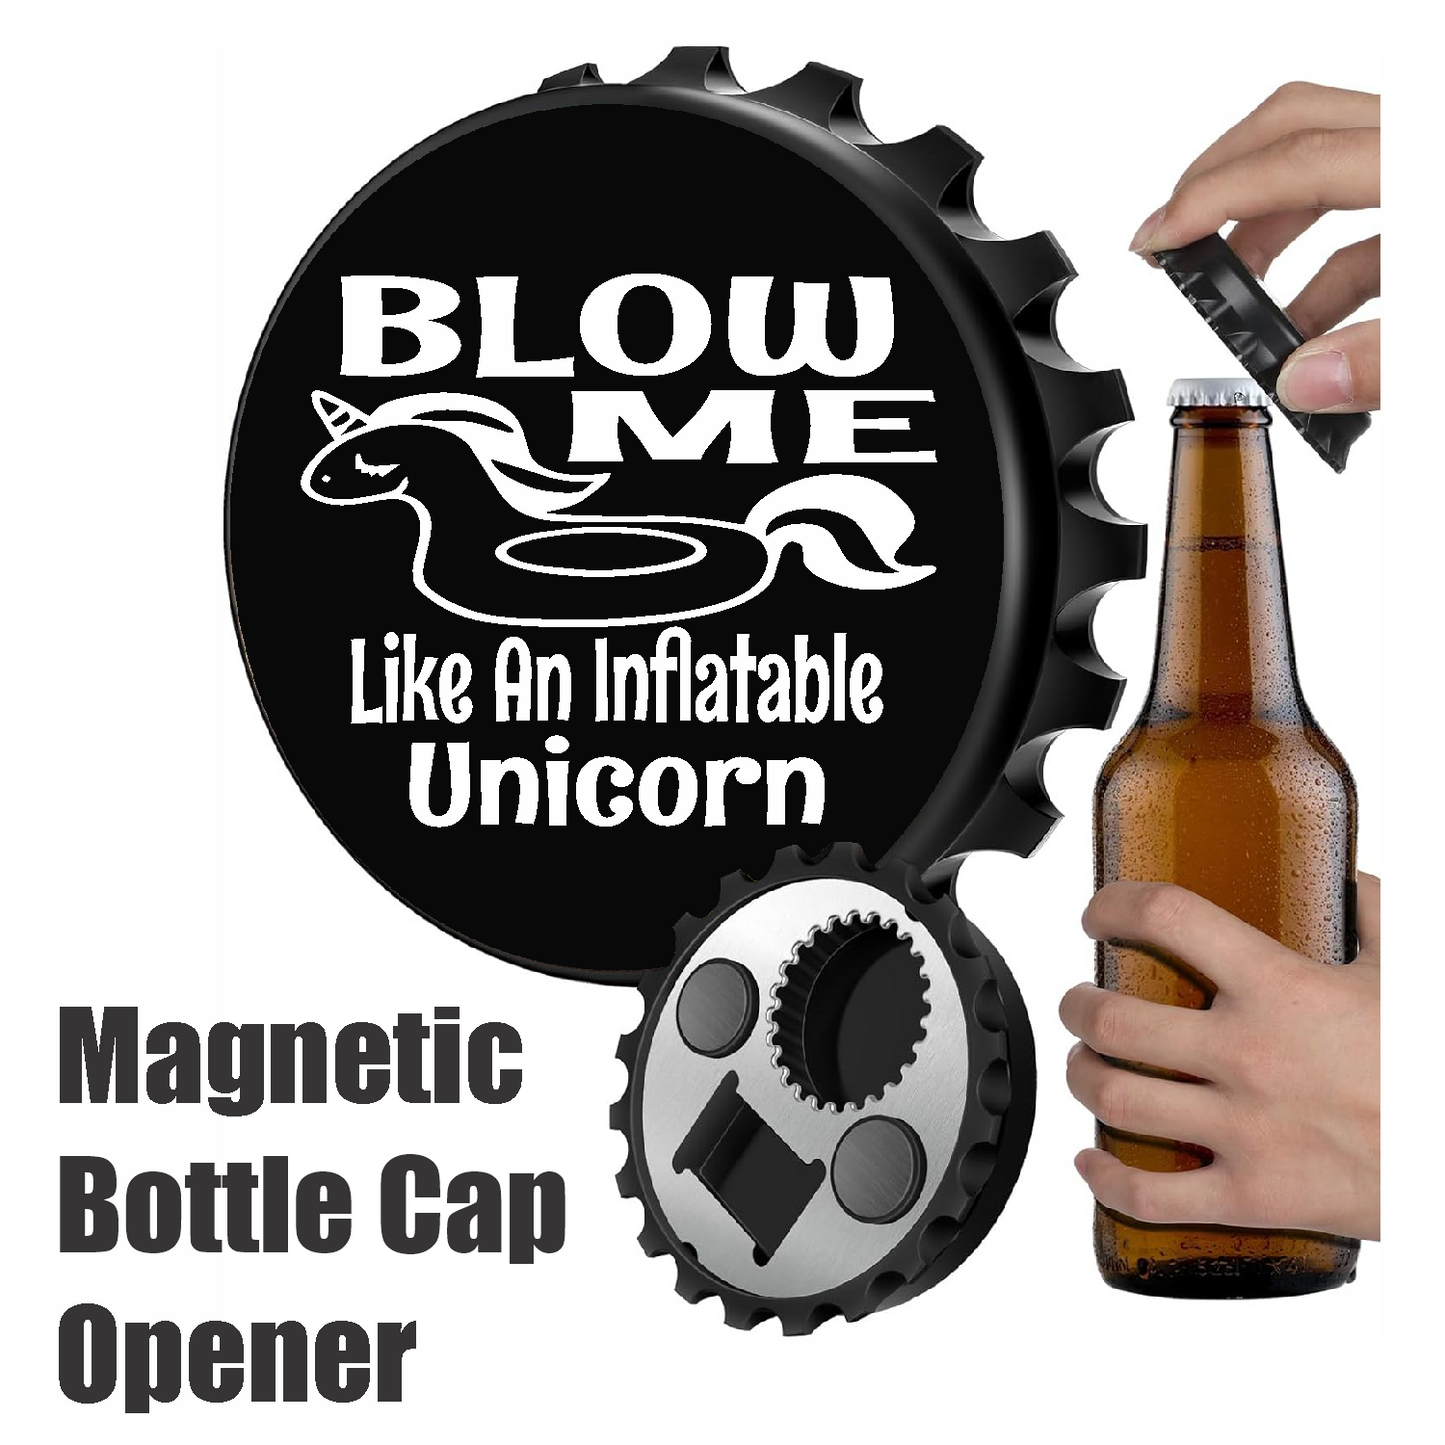 BLOW ME Like An Inflatable Unicorn - Designer Beer Bottle Opener Magnet for Refrigerator, Gifts for Beer Lovers, Black